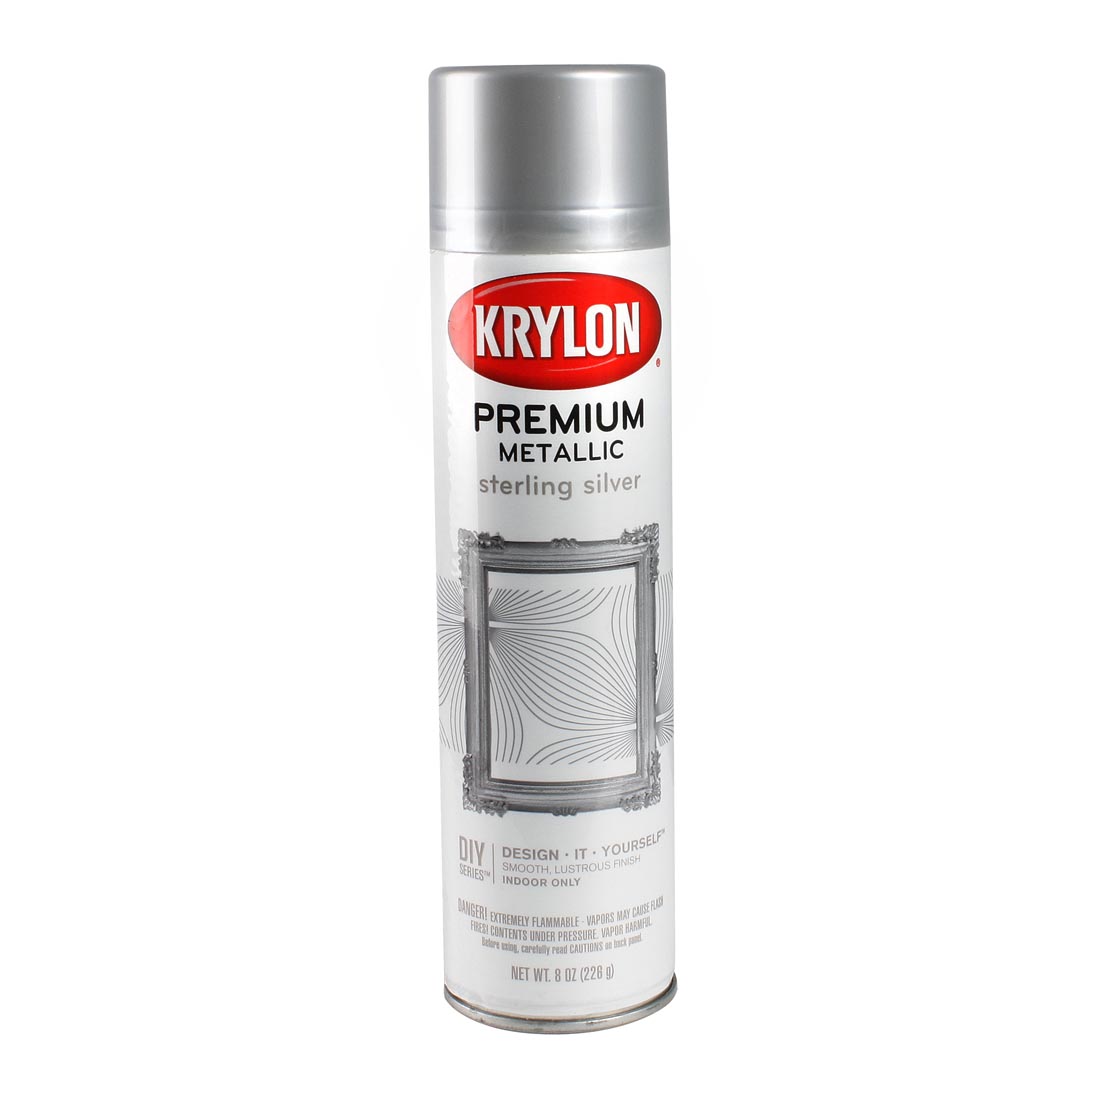 Krylon Premium Metallic Sterling Silver Spray Paint